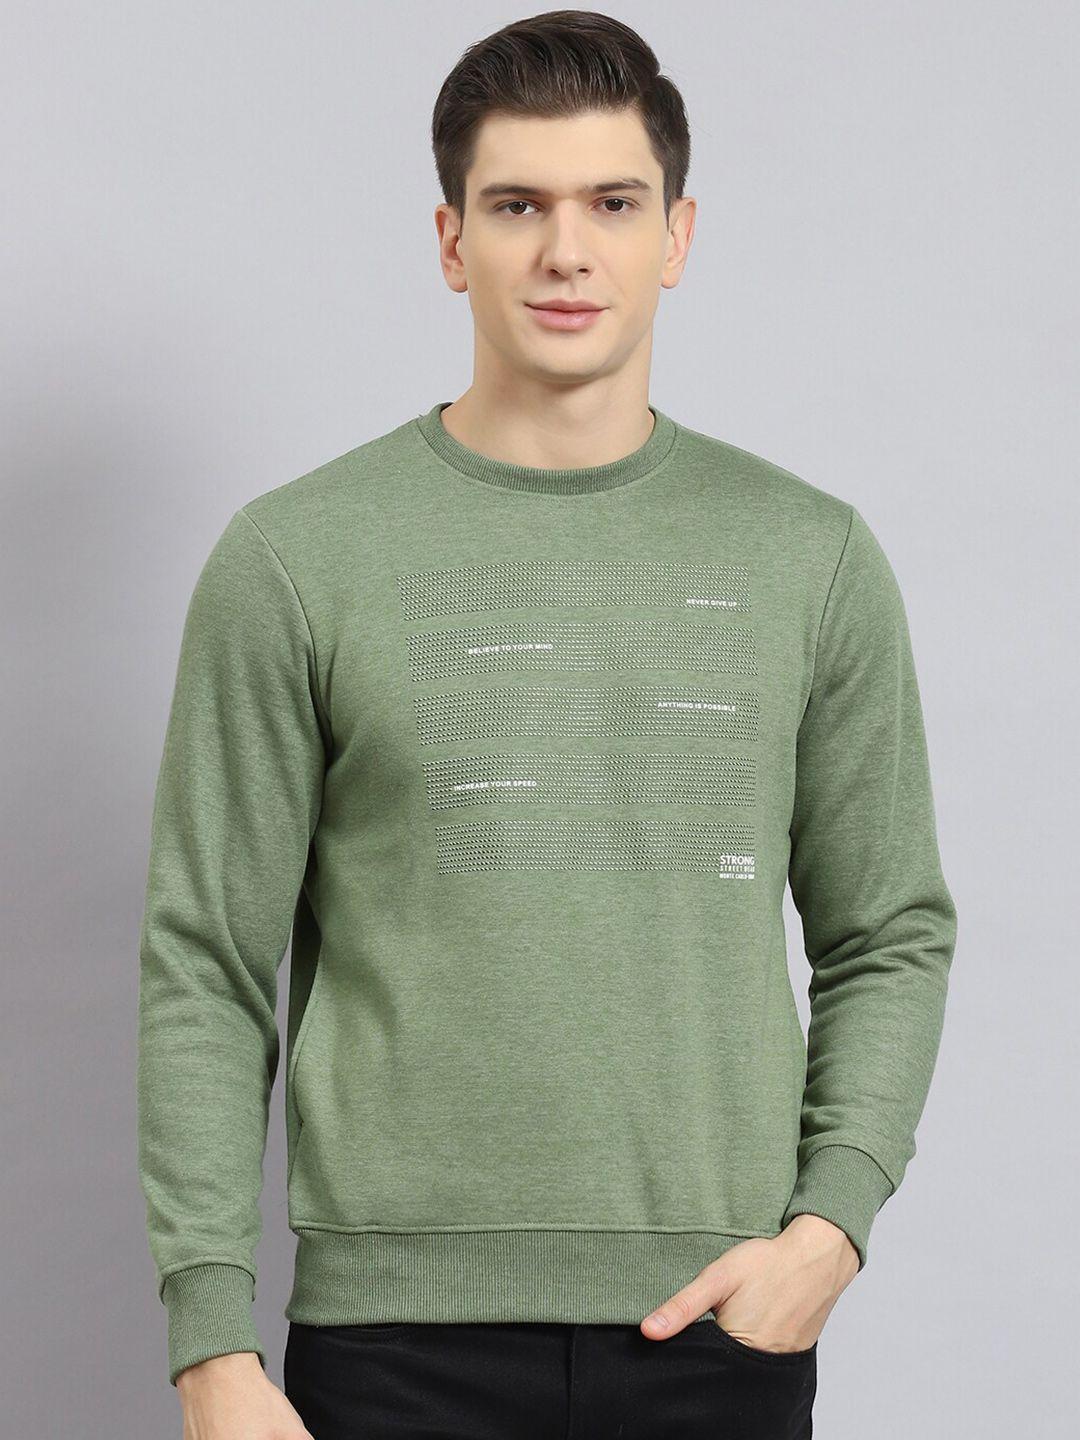 monte-carlo-typography-printed-round-neck-cotton-pullover-sweatshirt